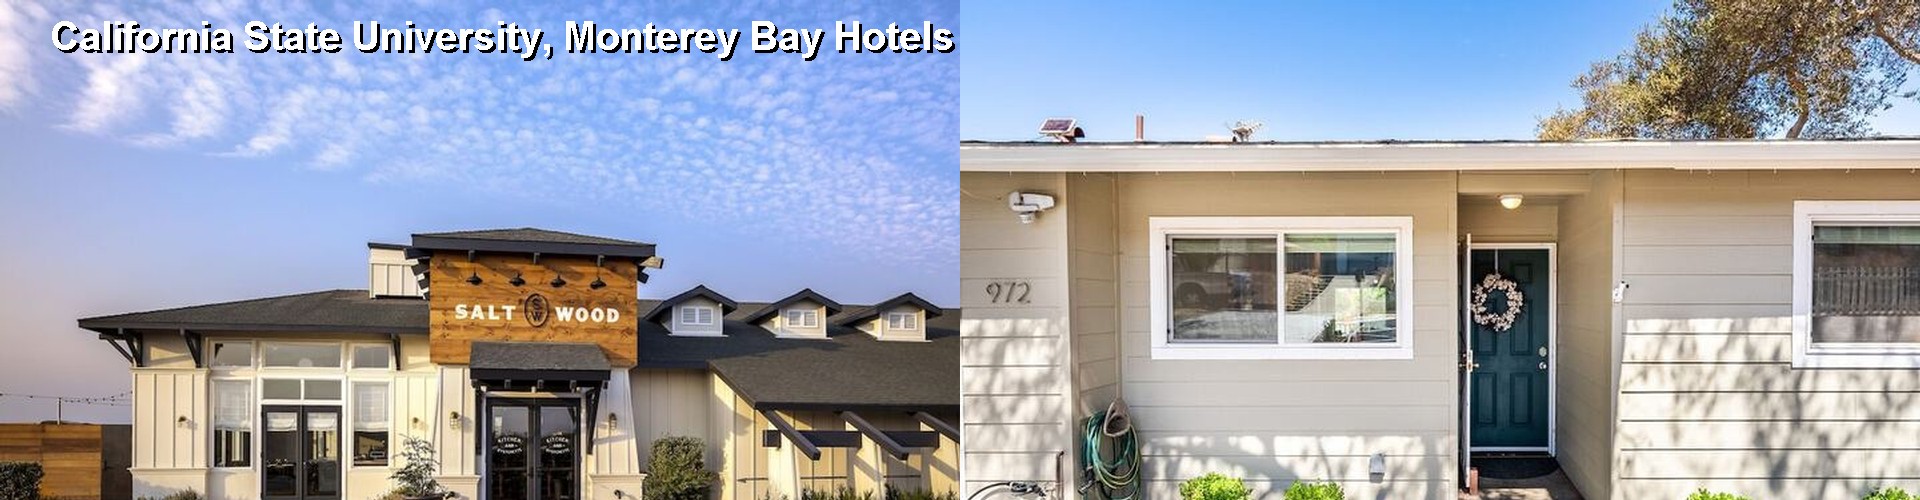 5 Best Hotels near California State University, Monterey Bay